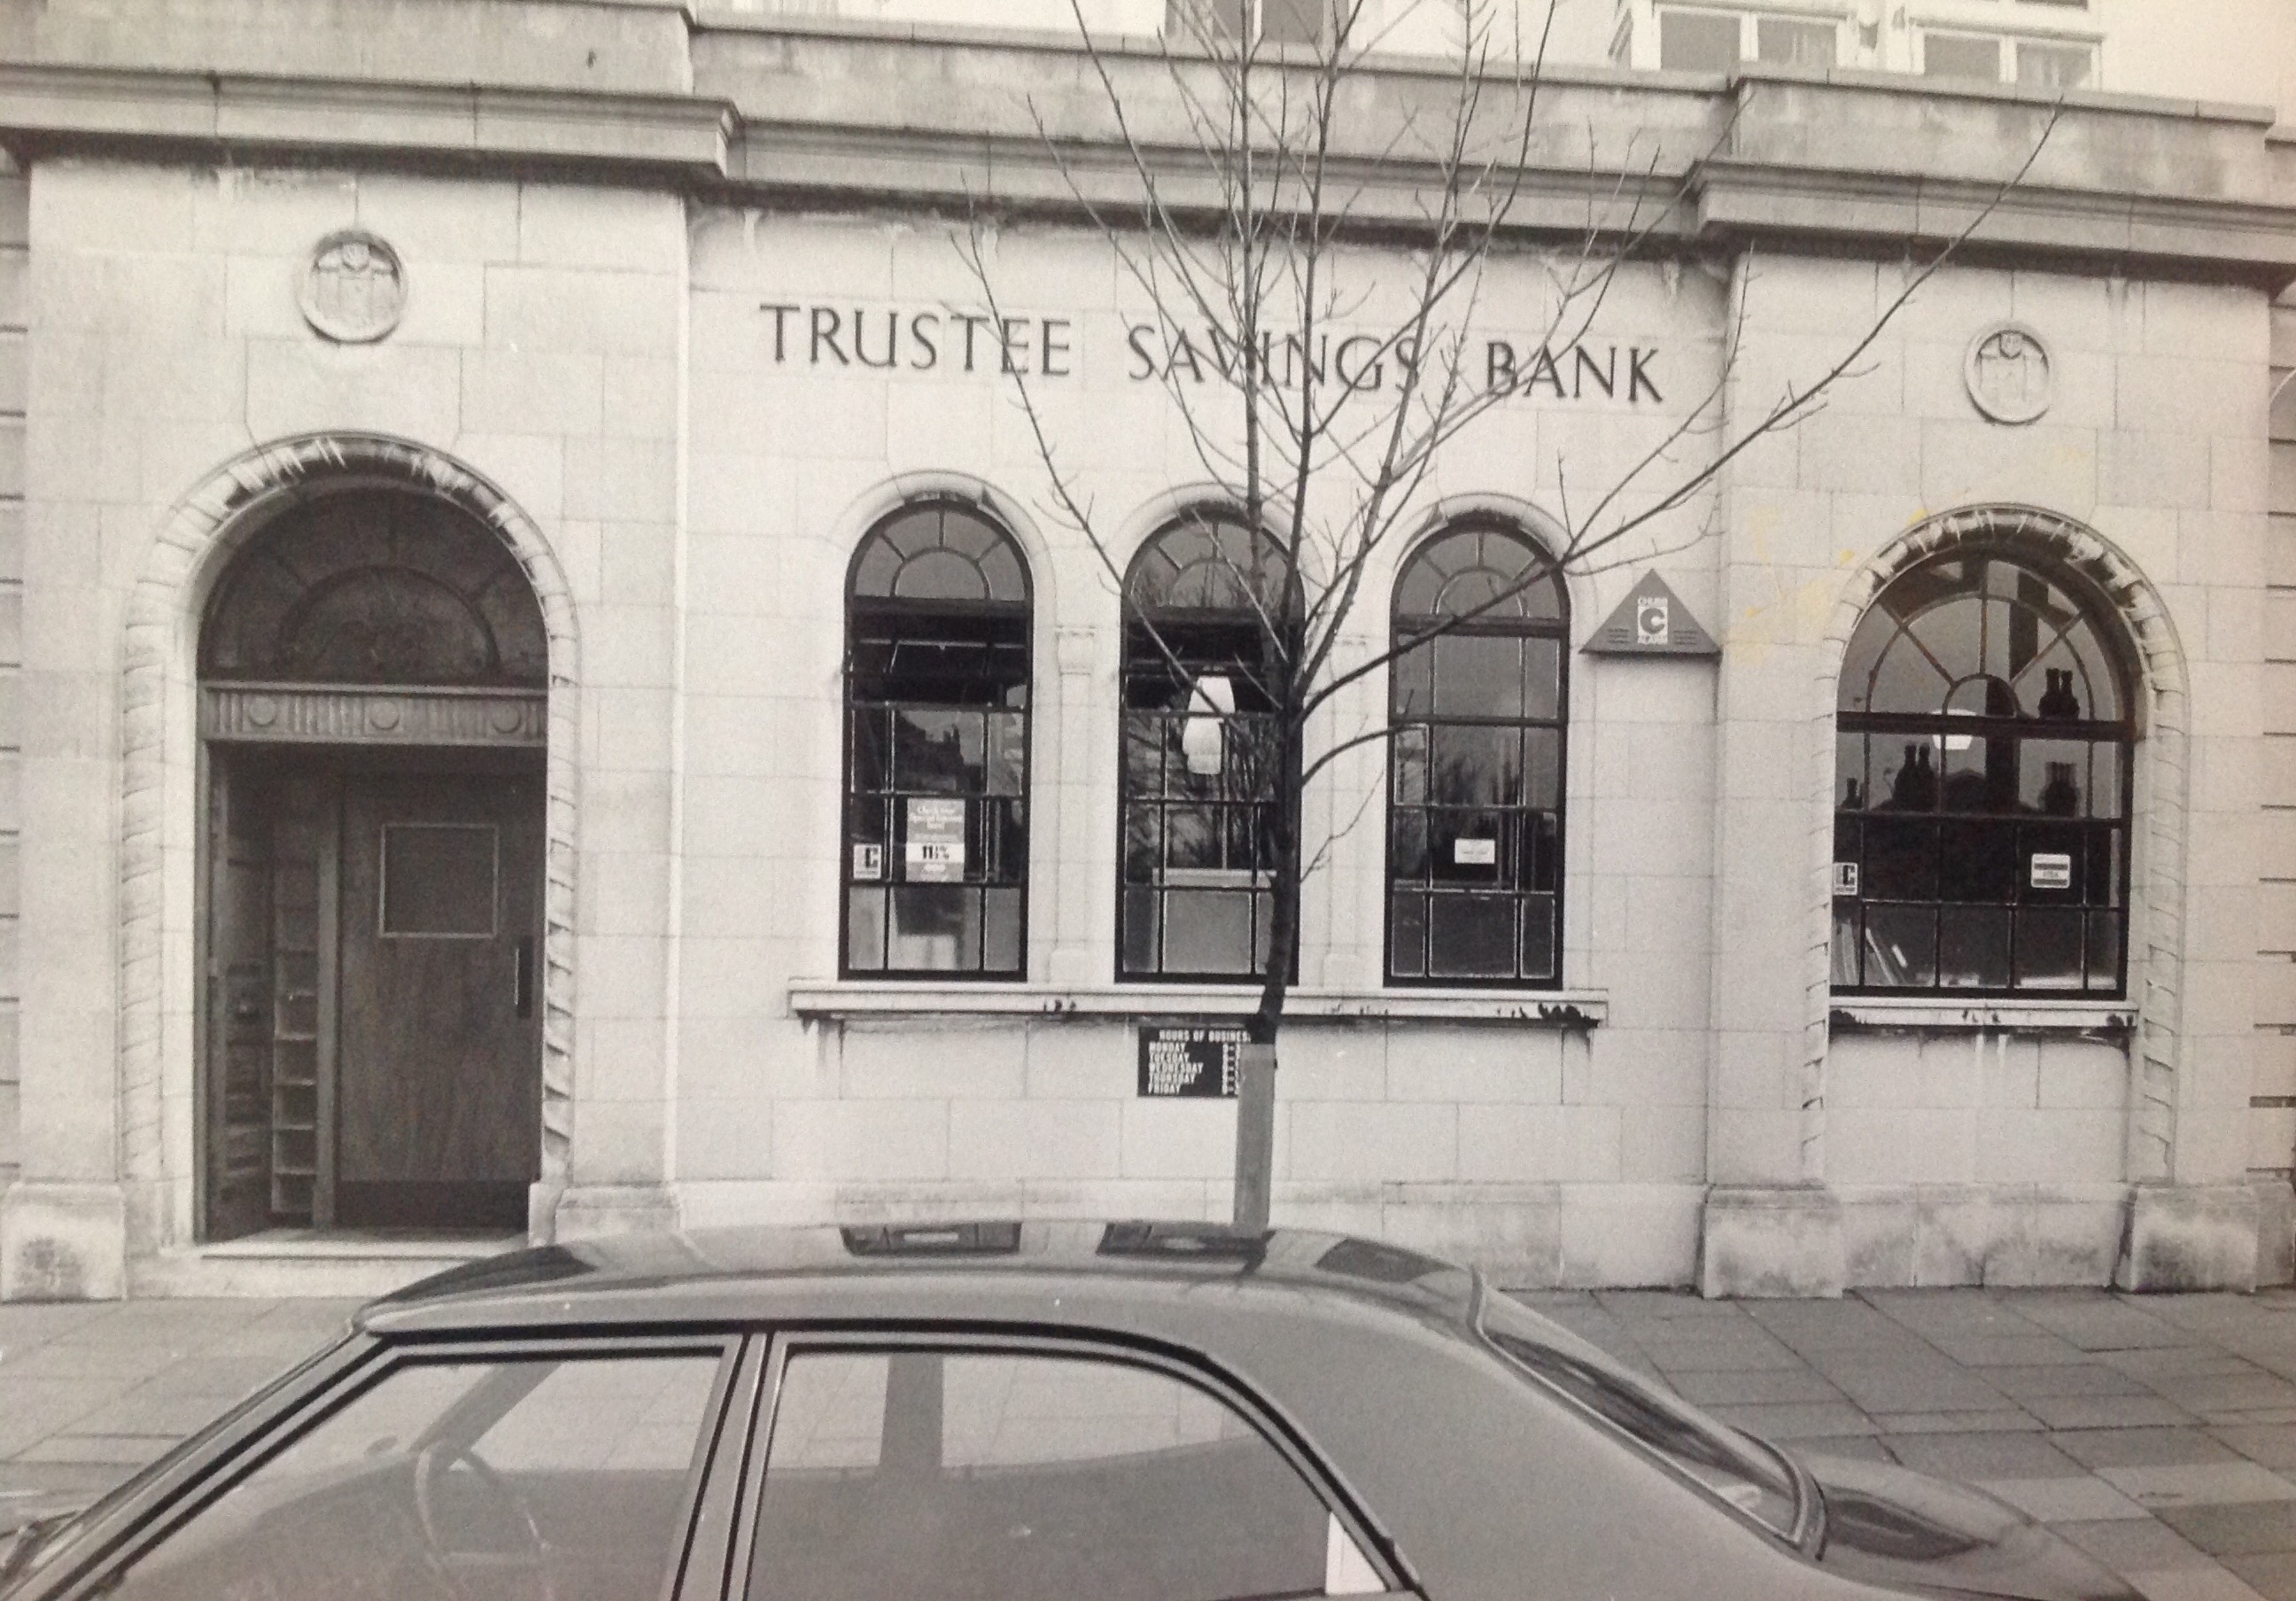 Trustee Savings Bank in Birkdale Village in the 1980s.